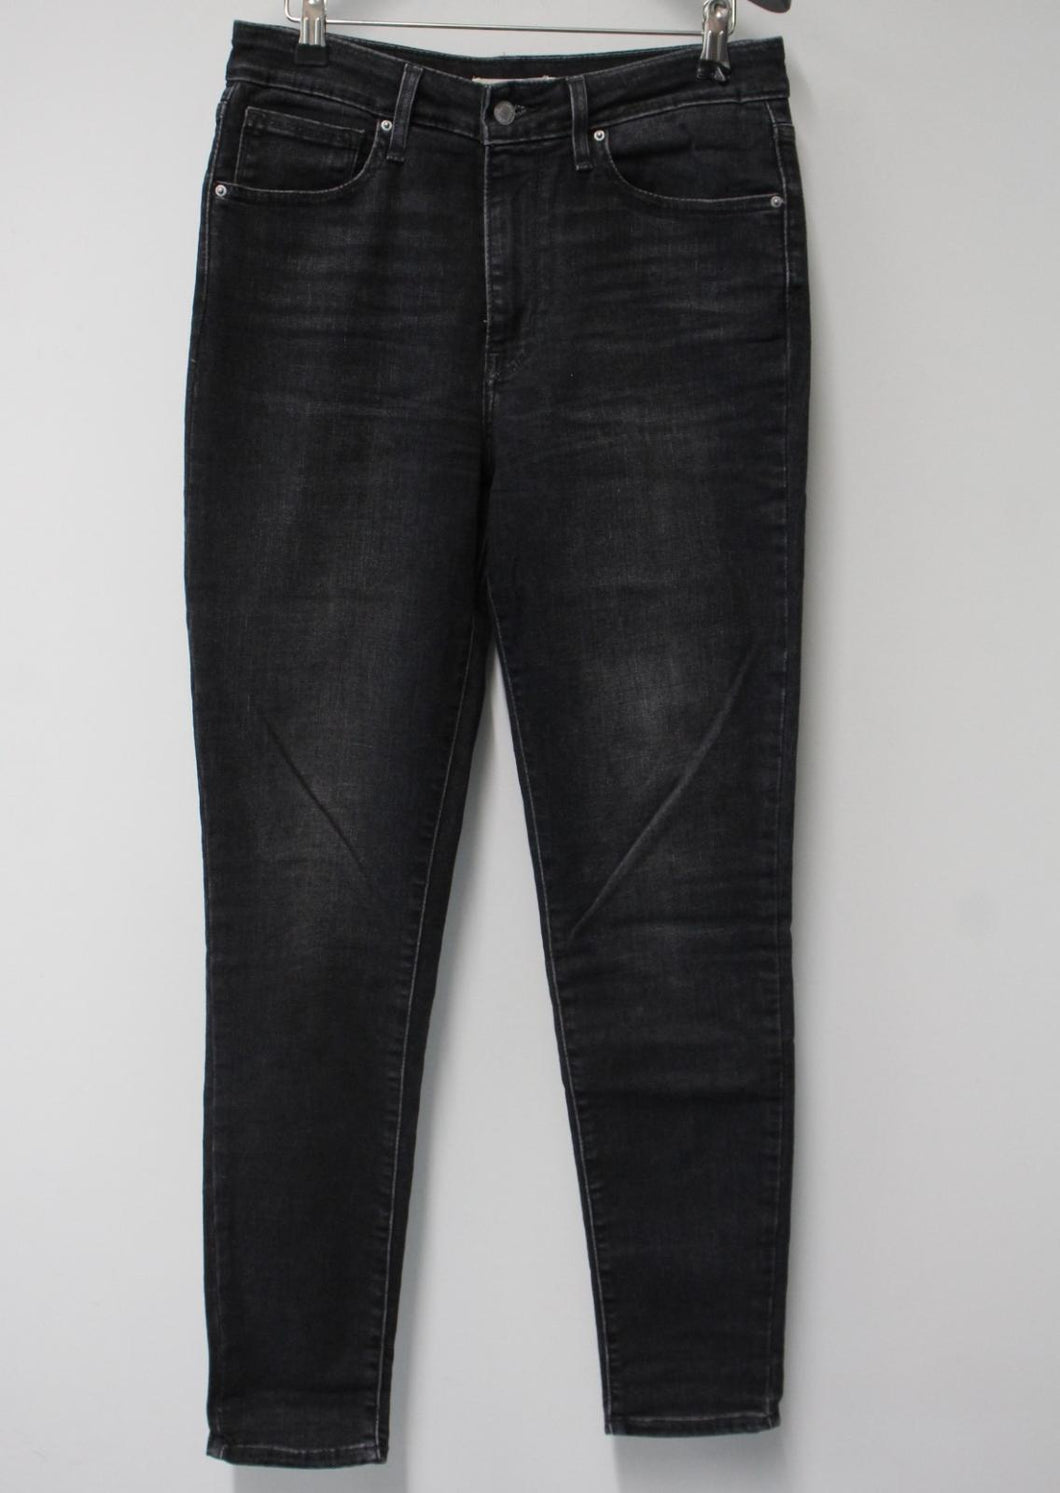 LEVI'S Ladies Washed Black Cotton Blend 721 High Rise Skinny Denim Jeans W30 L30